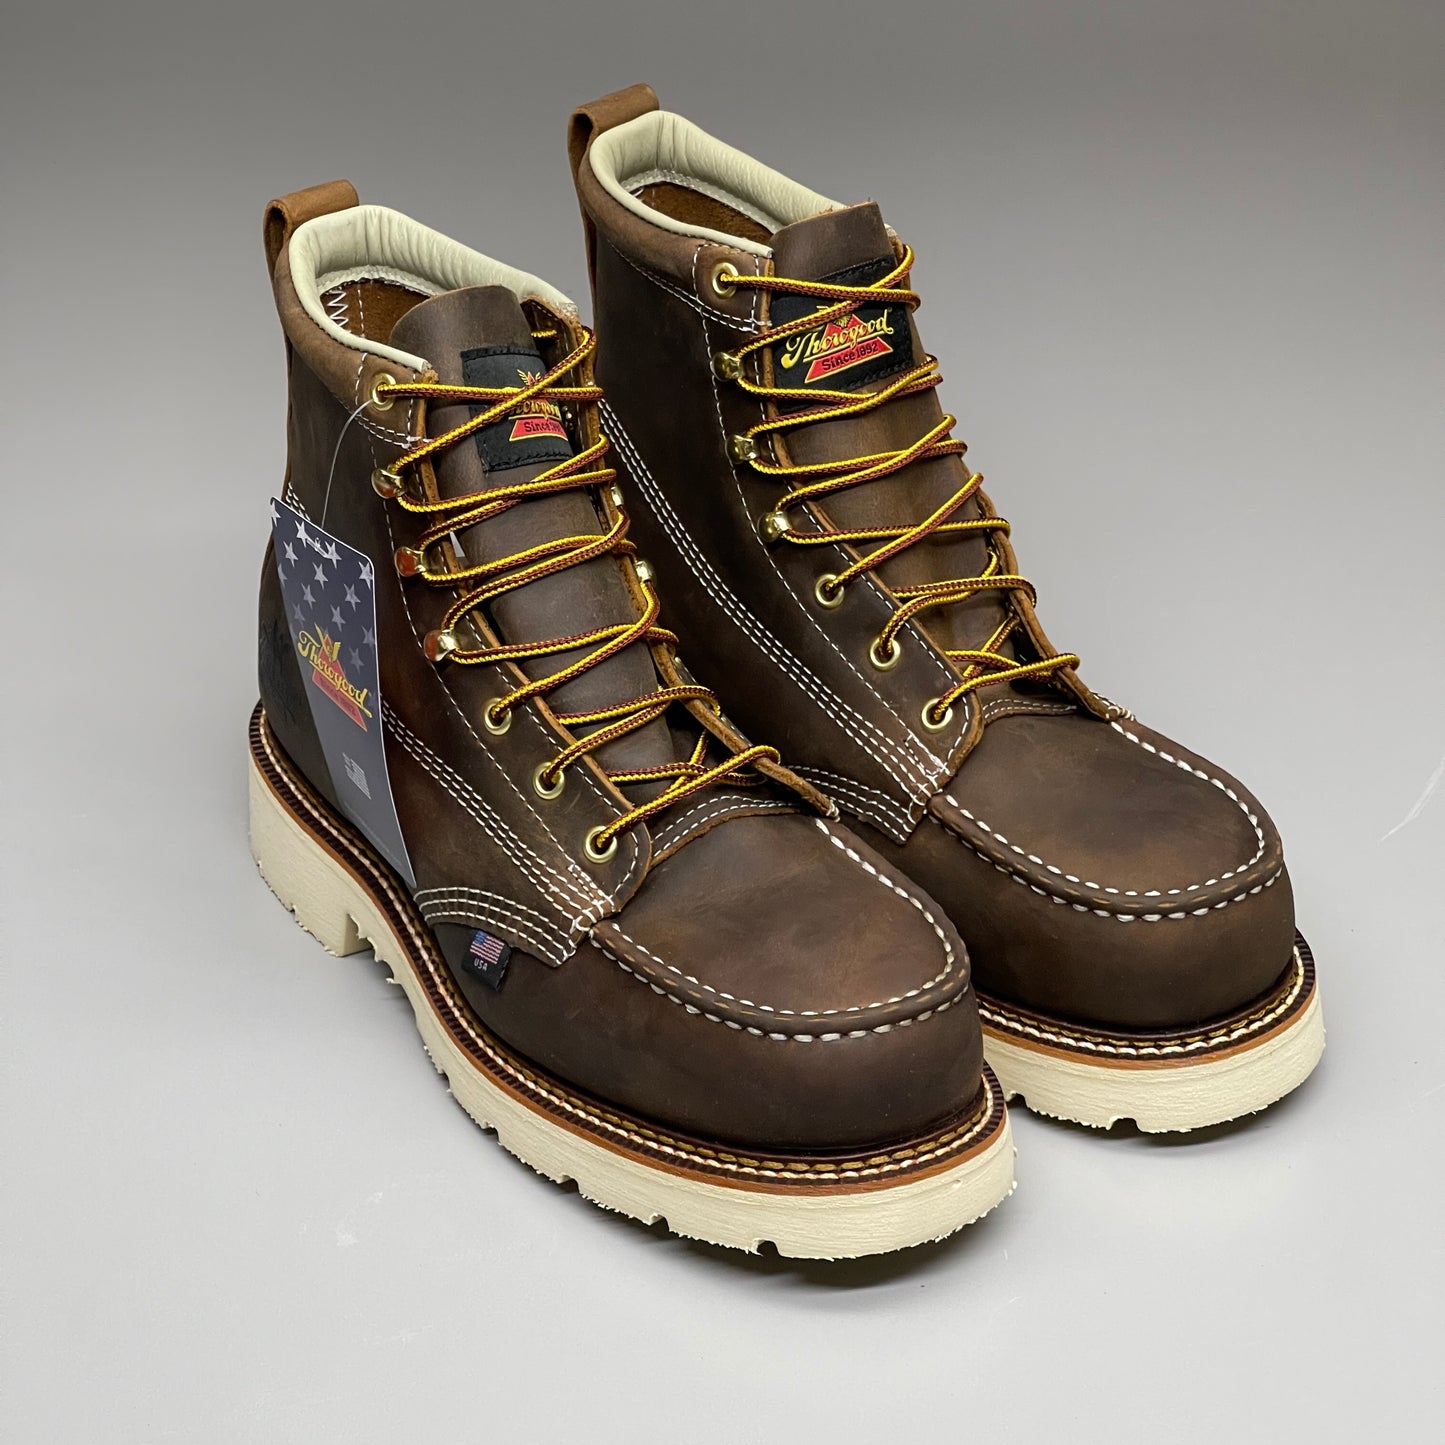 THOROGOOD Men's 6" Steel Toe Work Boot Sz 8.5 W D 804-4375 (New)